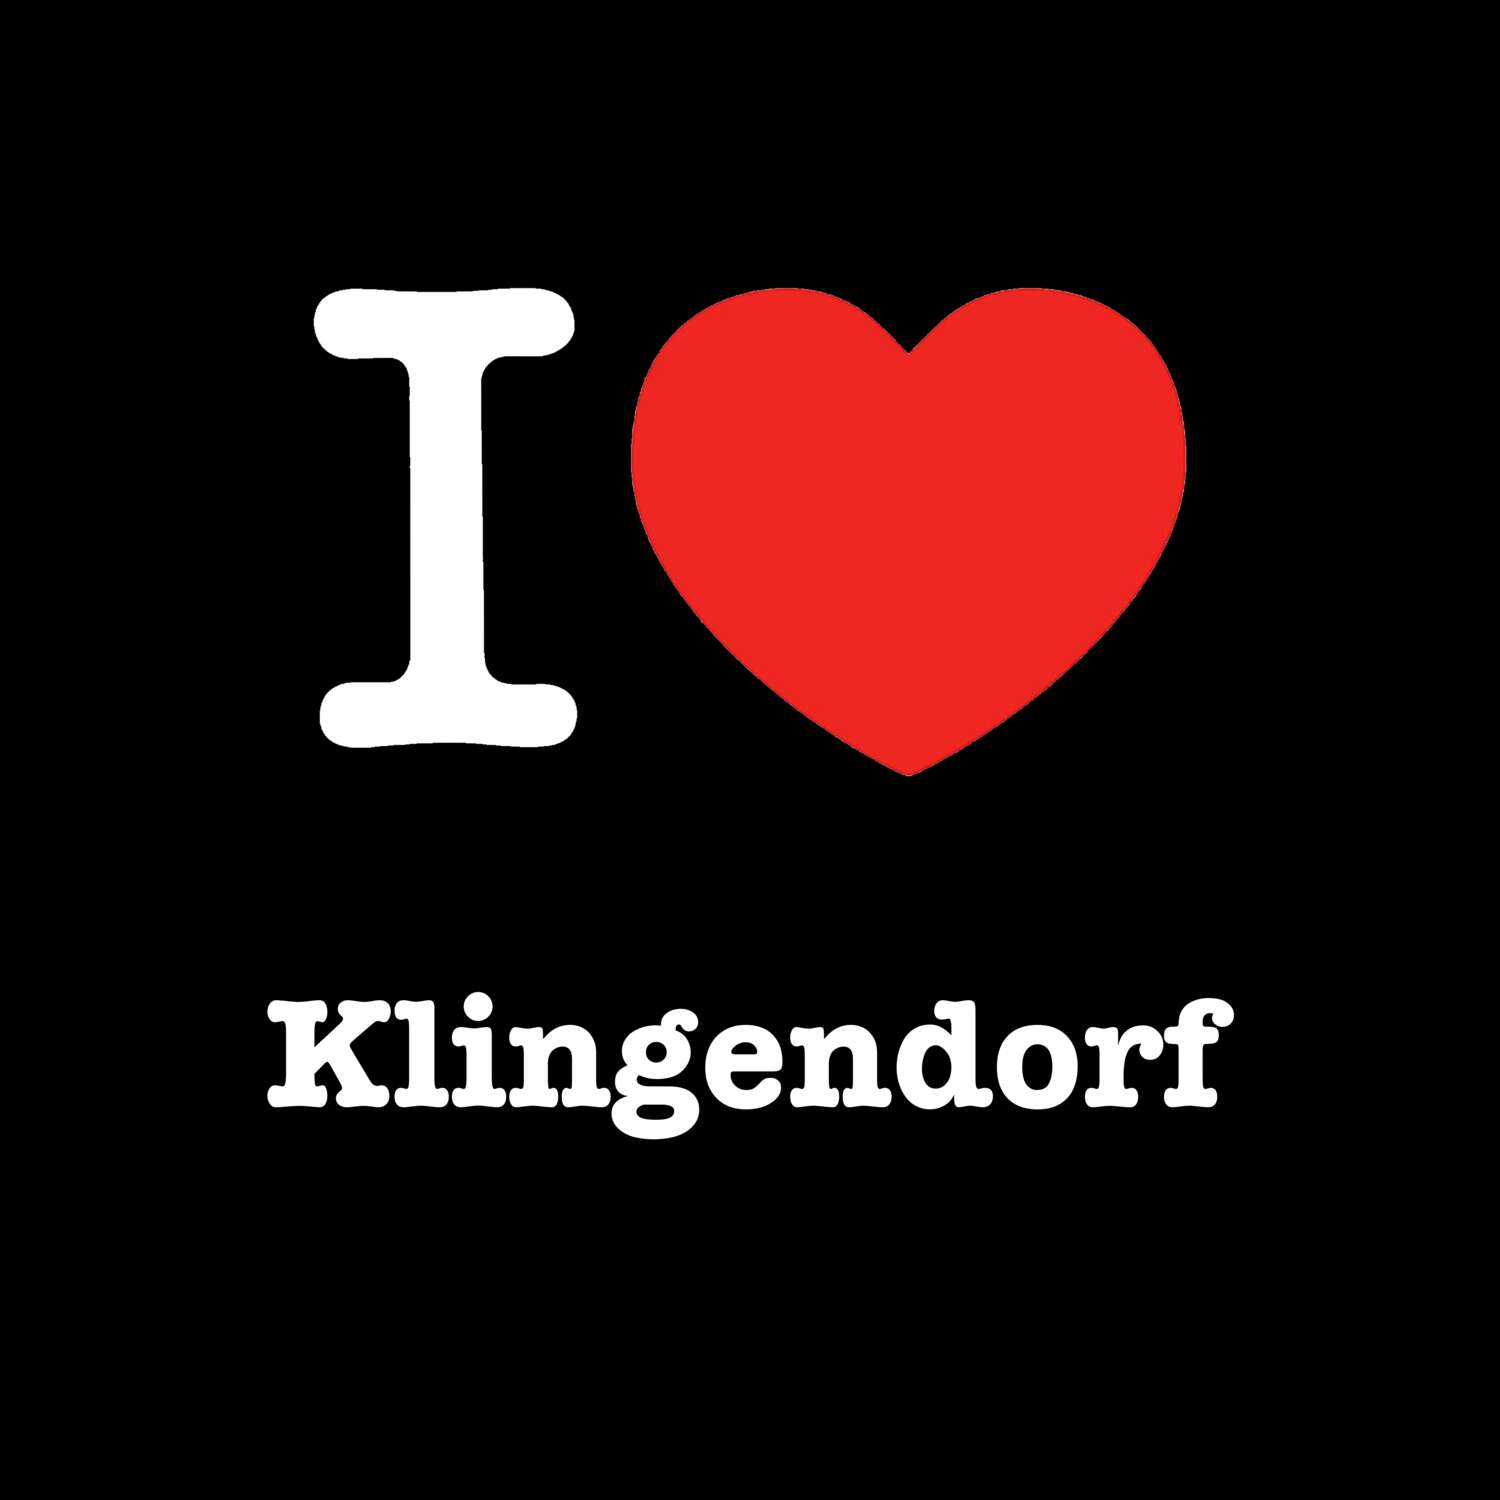 Klingendorf T-Shirt »I love«